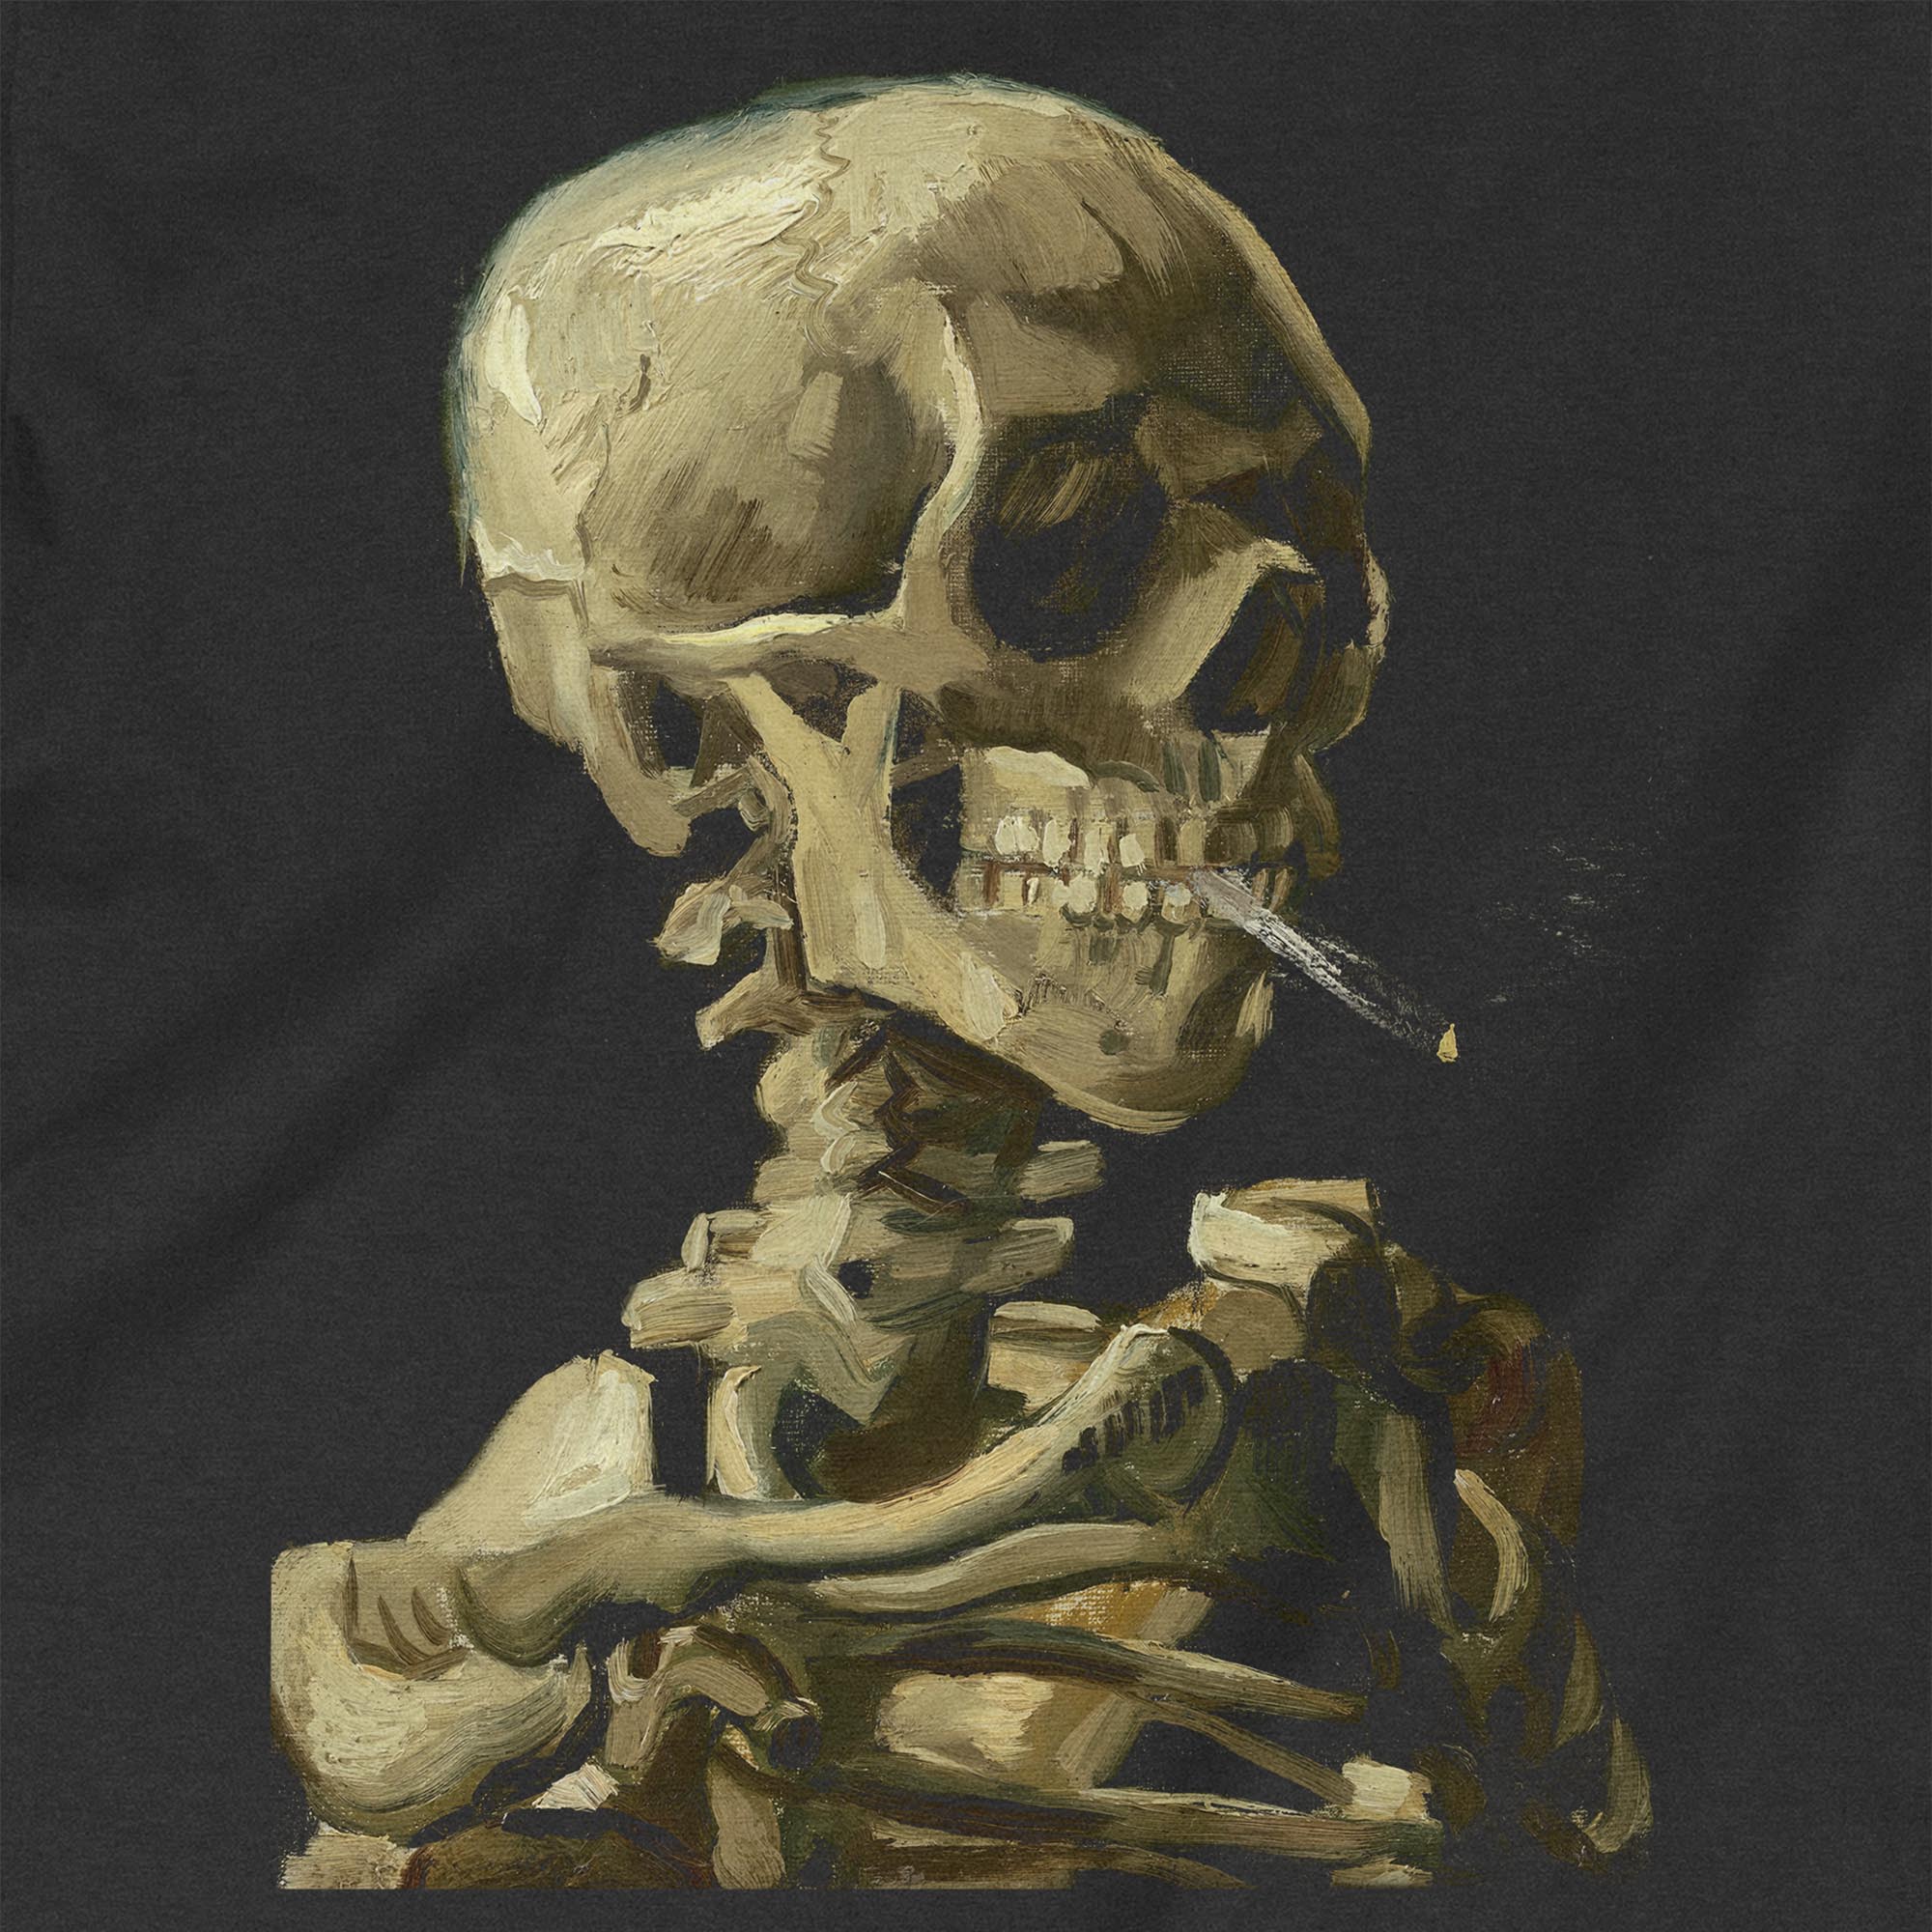 T-Shirts Spliff Skeleton Smoking Weed Skull Cannabis 420, Pot, Herb, Ganja, Marijuana, Stoner, Pothead Van Gogh Weed Graphic T-Shirt